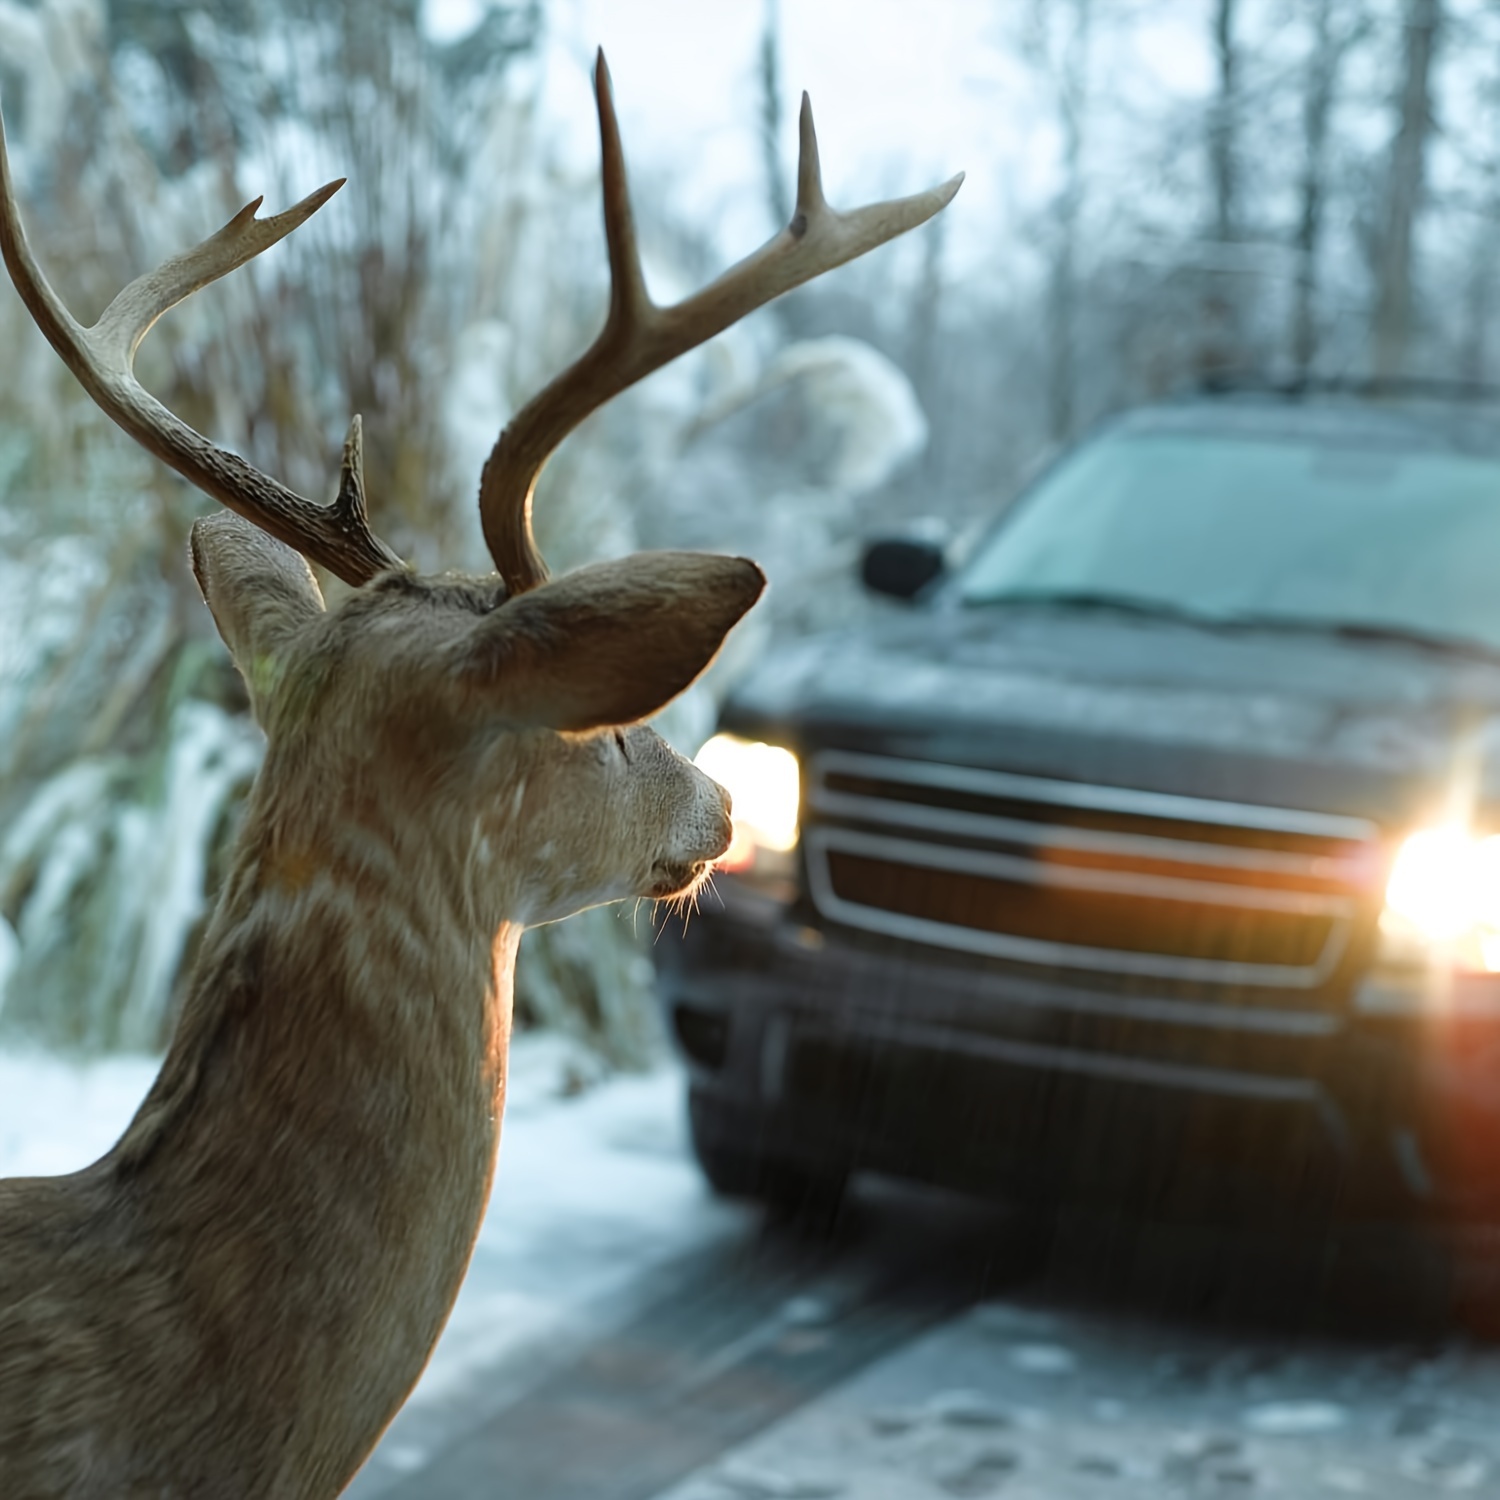 4 Pcs Deer Whistles For Car Deer Warning Devices - Car Safety